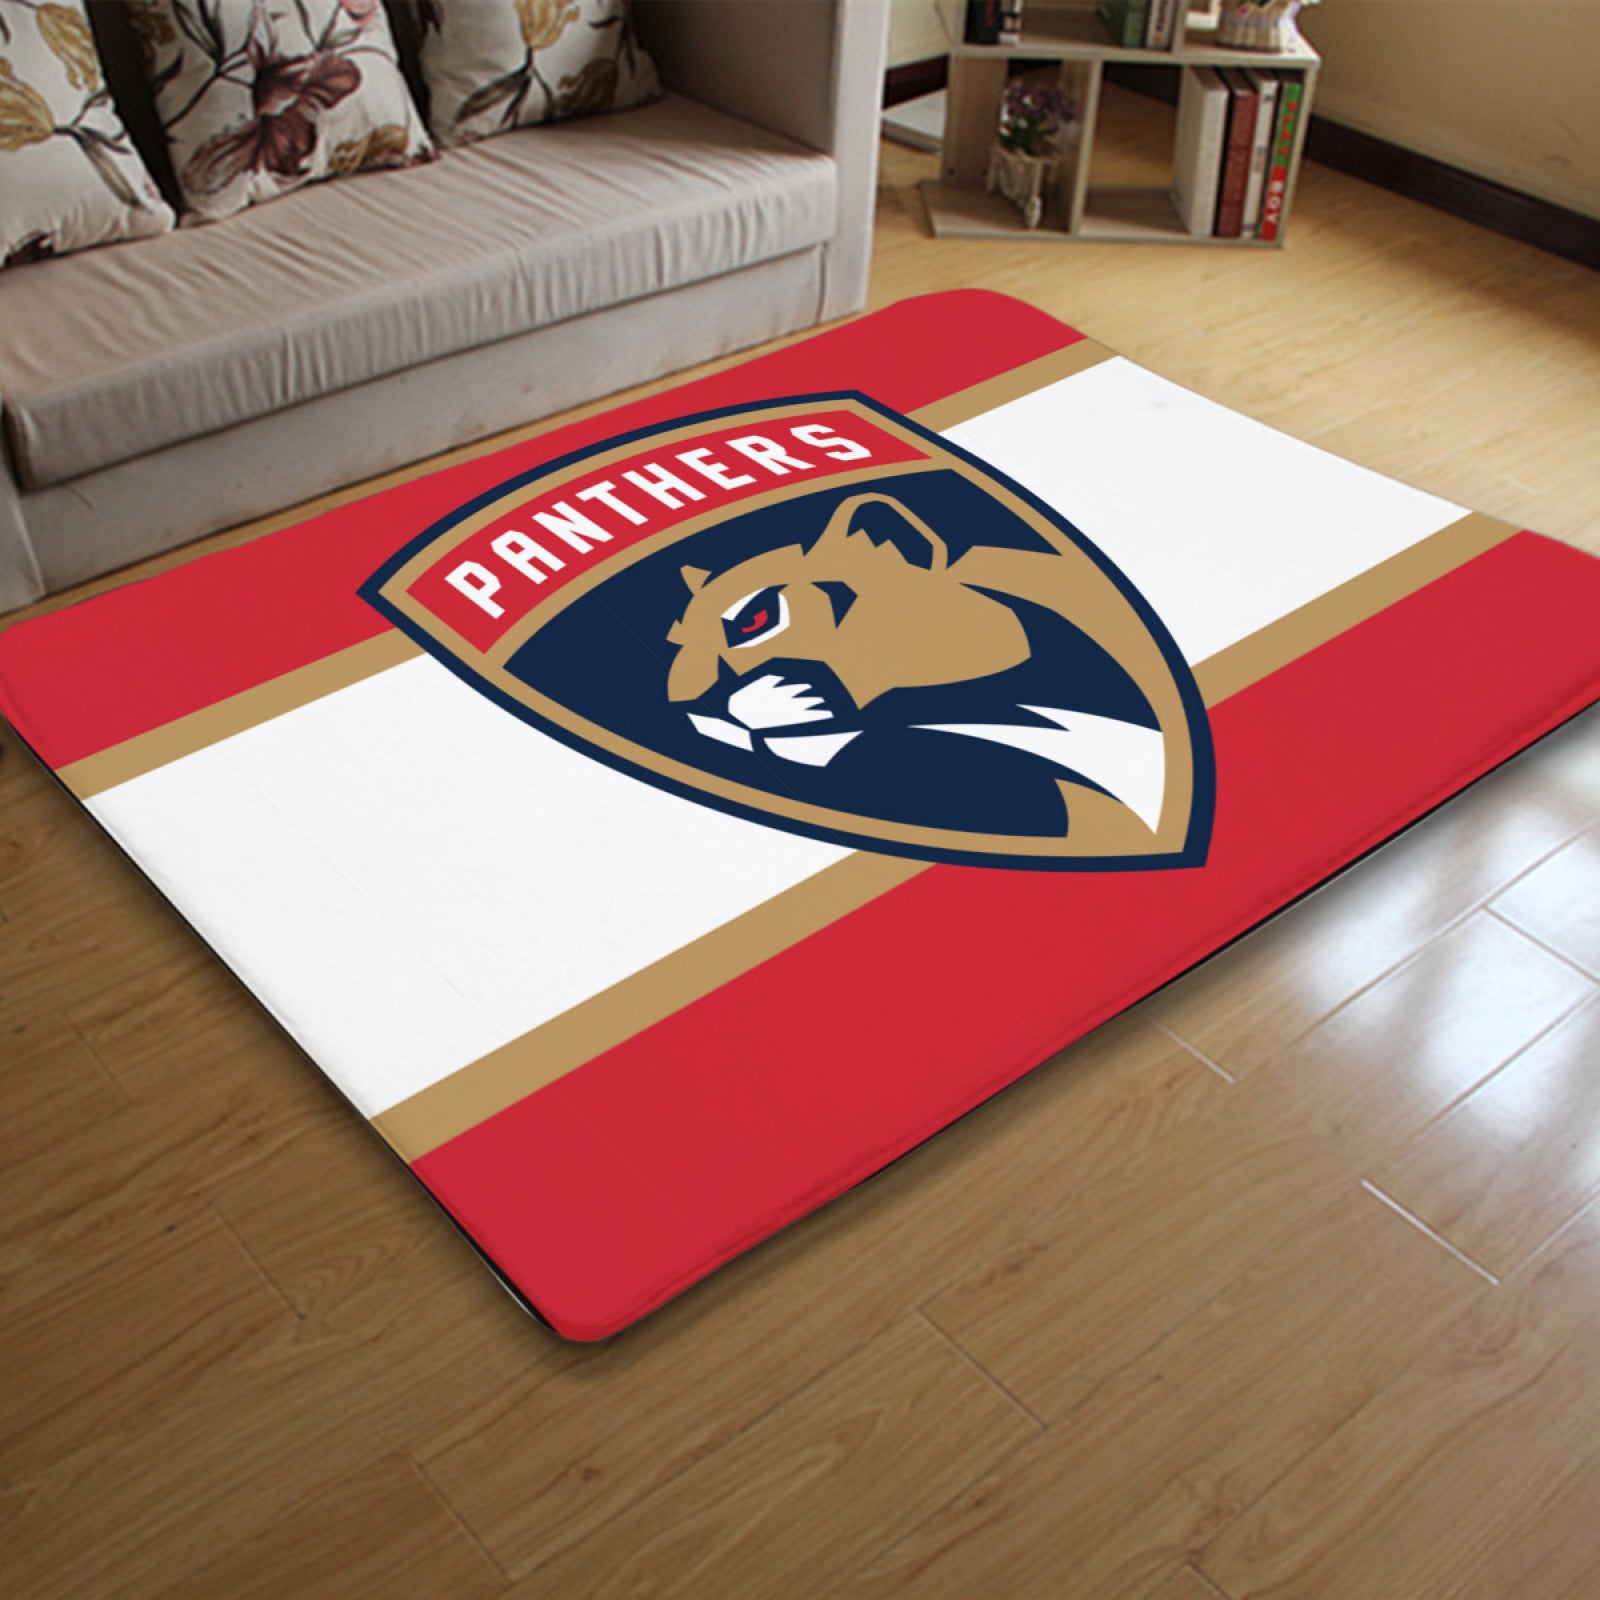 Florida Panthers Hockey League Carpet Living Room Bedroom Mats Kitchen Bathroom Rugs